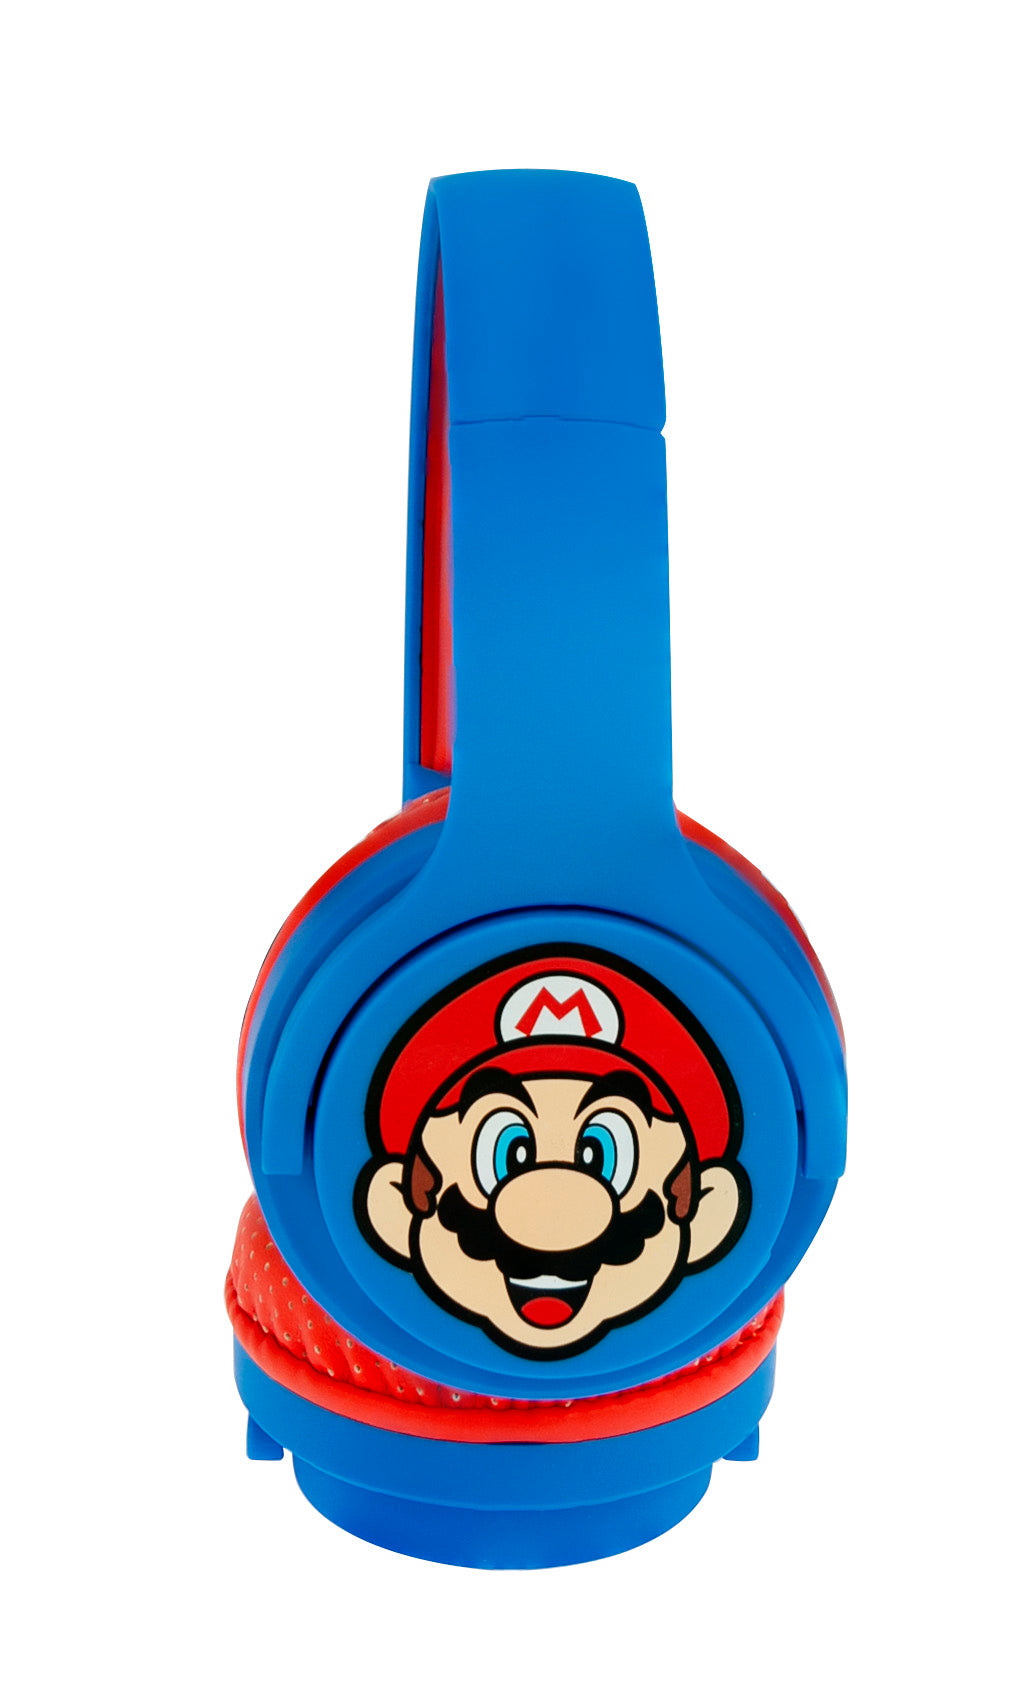 [OPEN BOX] OTL On-Ear Wireless Headphone - Super Mario